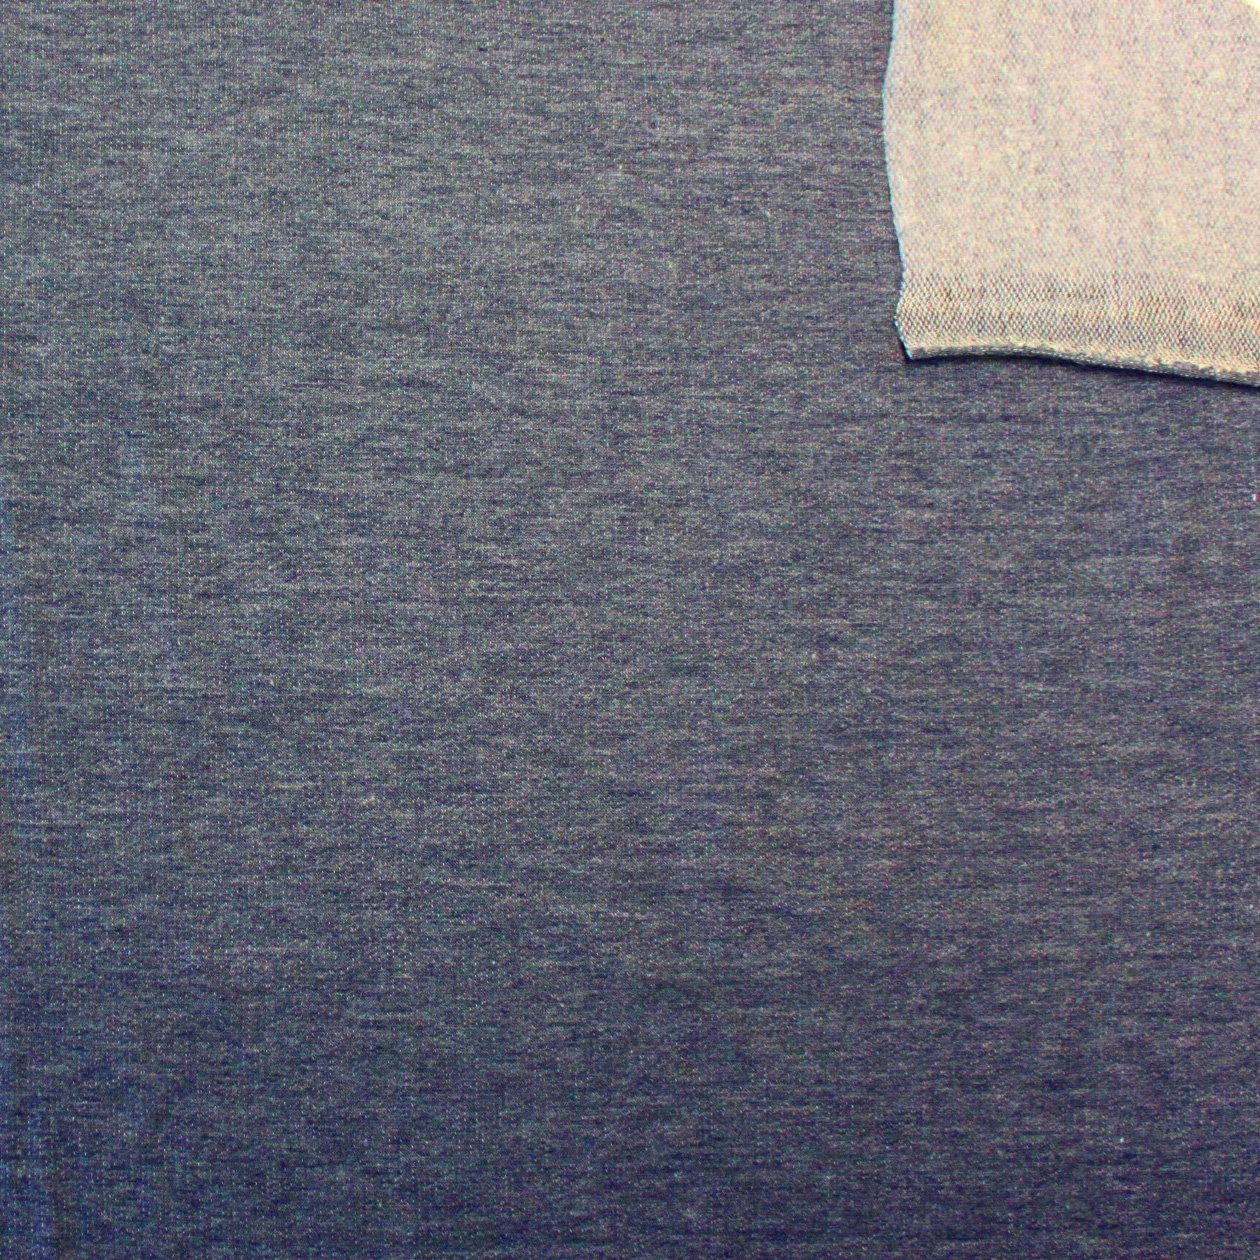 Navy Blue FLEECE Sweatshirt Knit Fabric Fabric, Raspberry Creek Fabrics, watermarked, restored